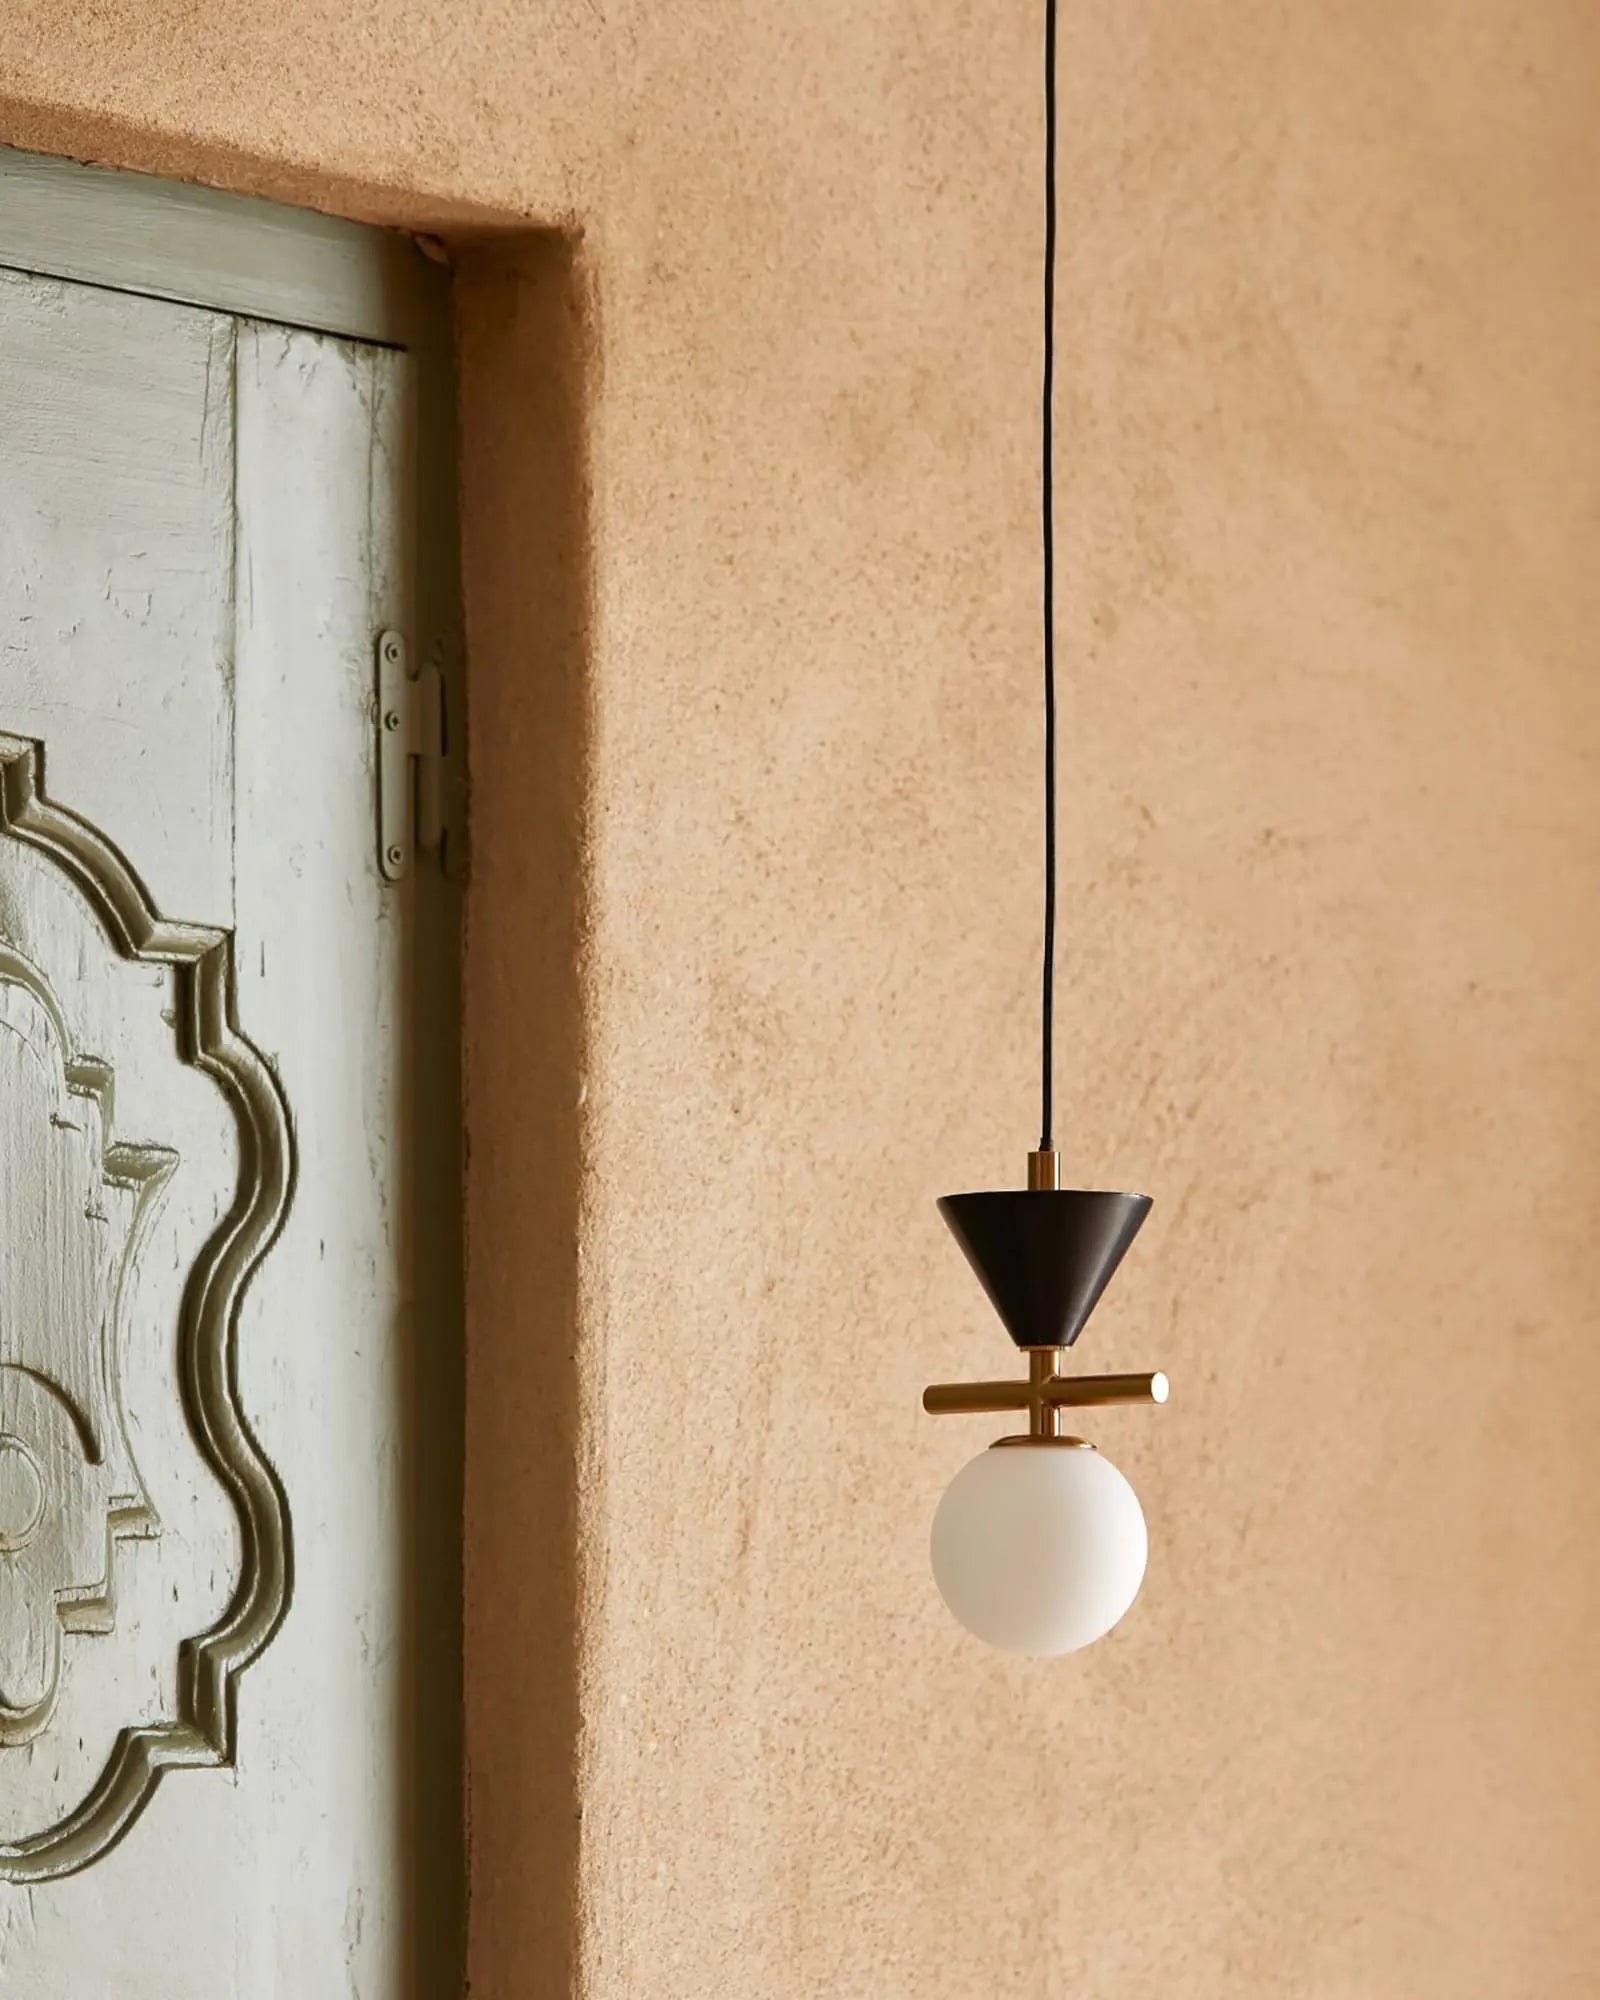 Oneta contemporary single pendant with opal glass orb shade near entry door